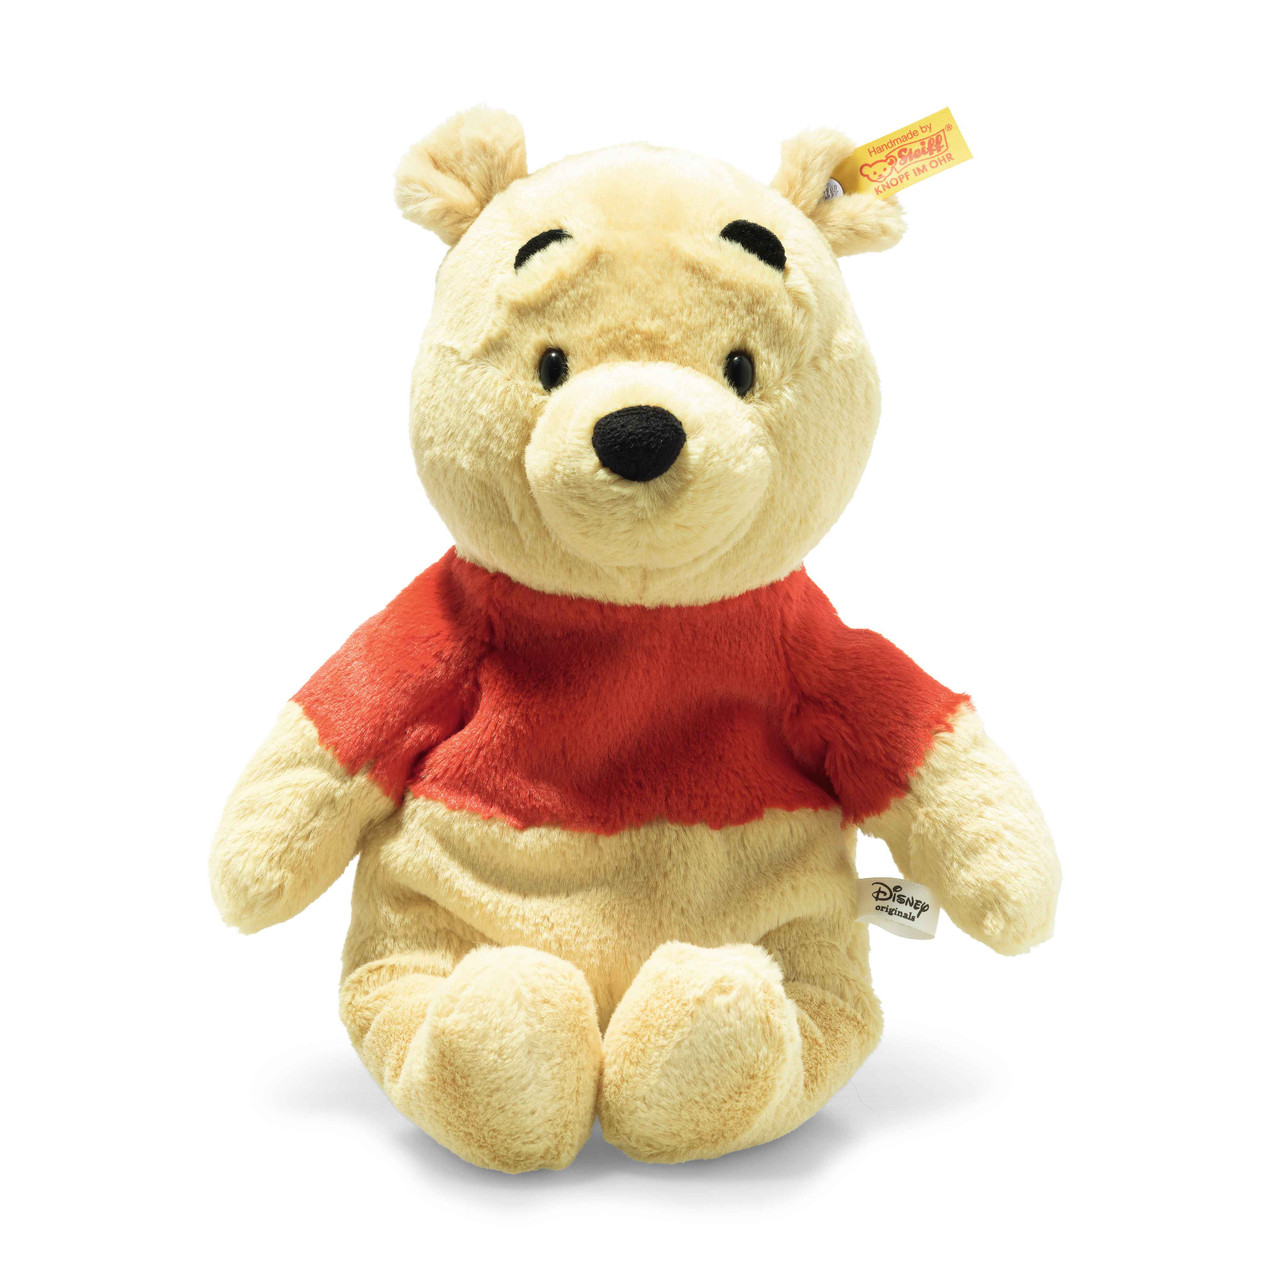 Steiff's Disney Winnie the Pooh Stuffed Animal Toy for Kids